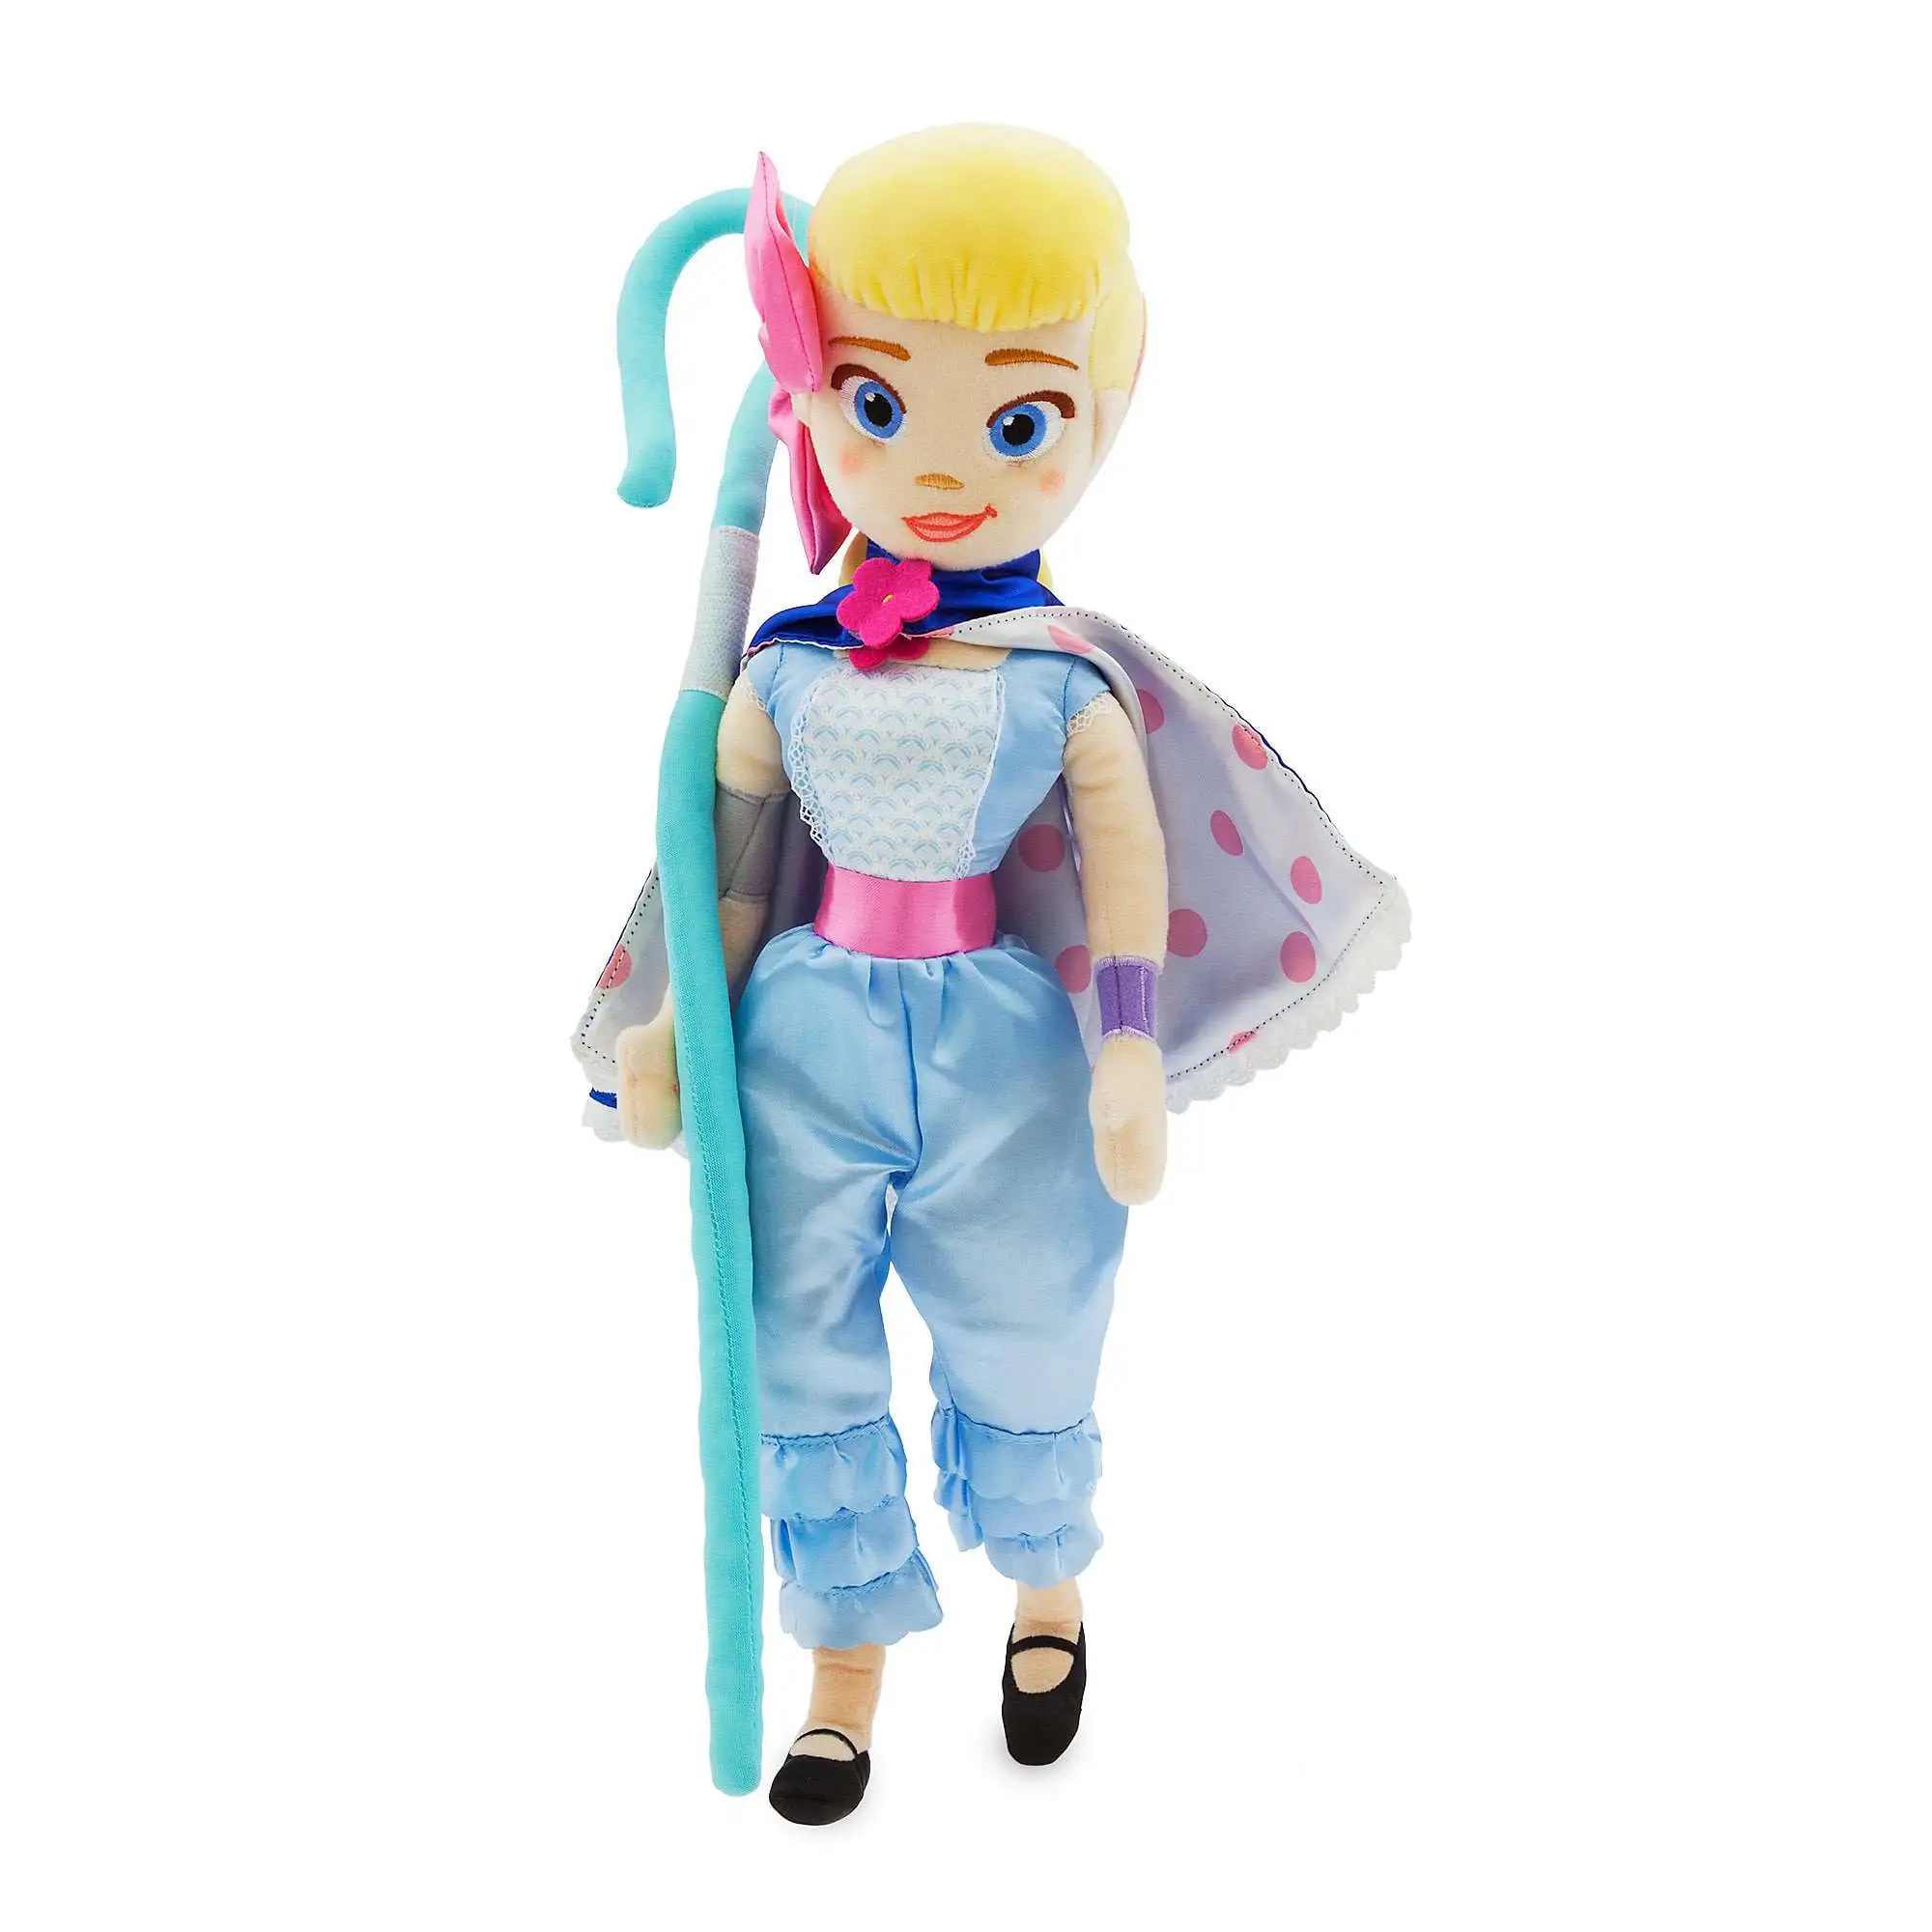 Disney Pixar 14 inch Toy Story Bo Peep Talking Action Figure for sale online 